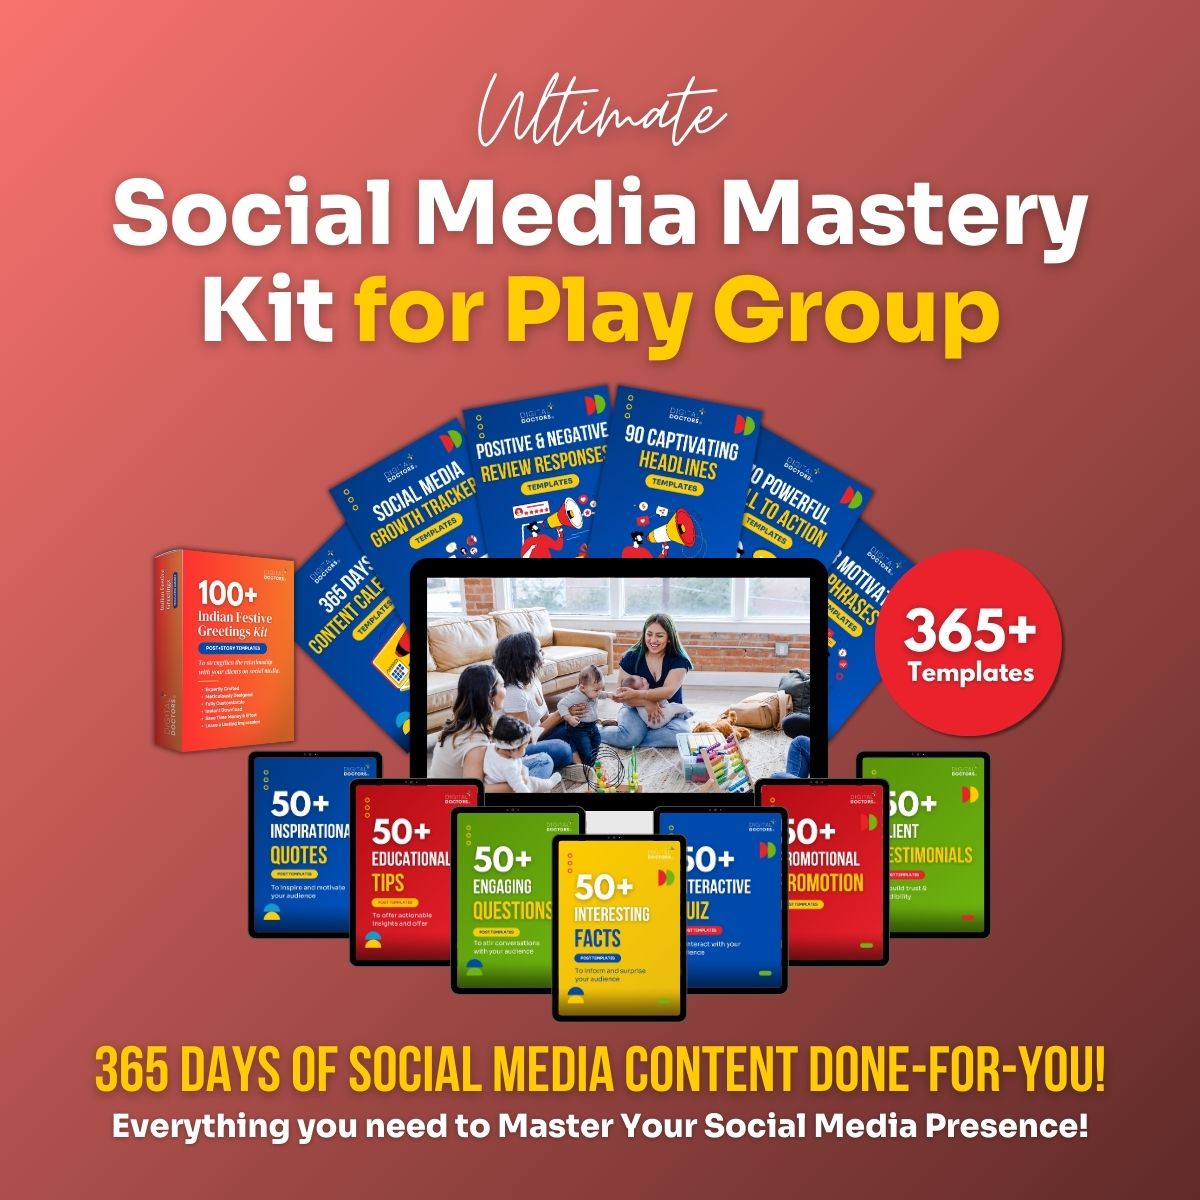 Ultimate Social Media Kit for Play Group